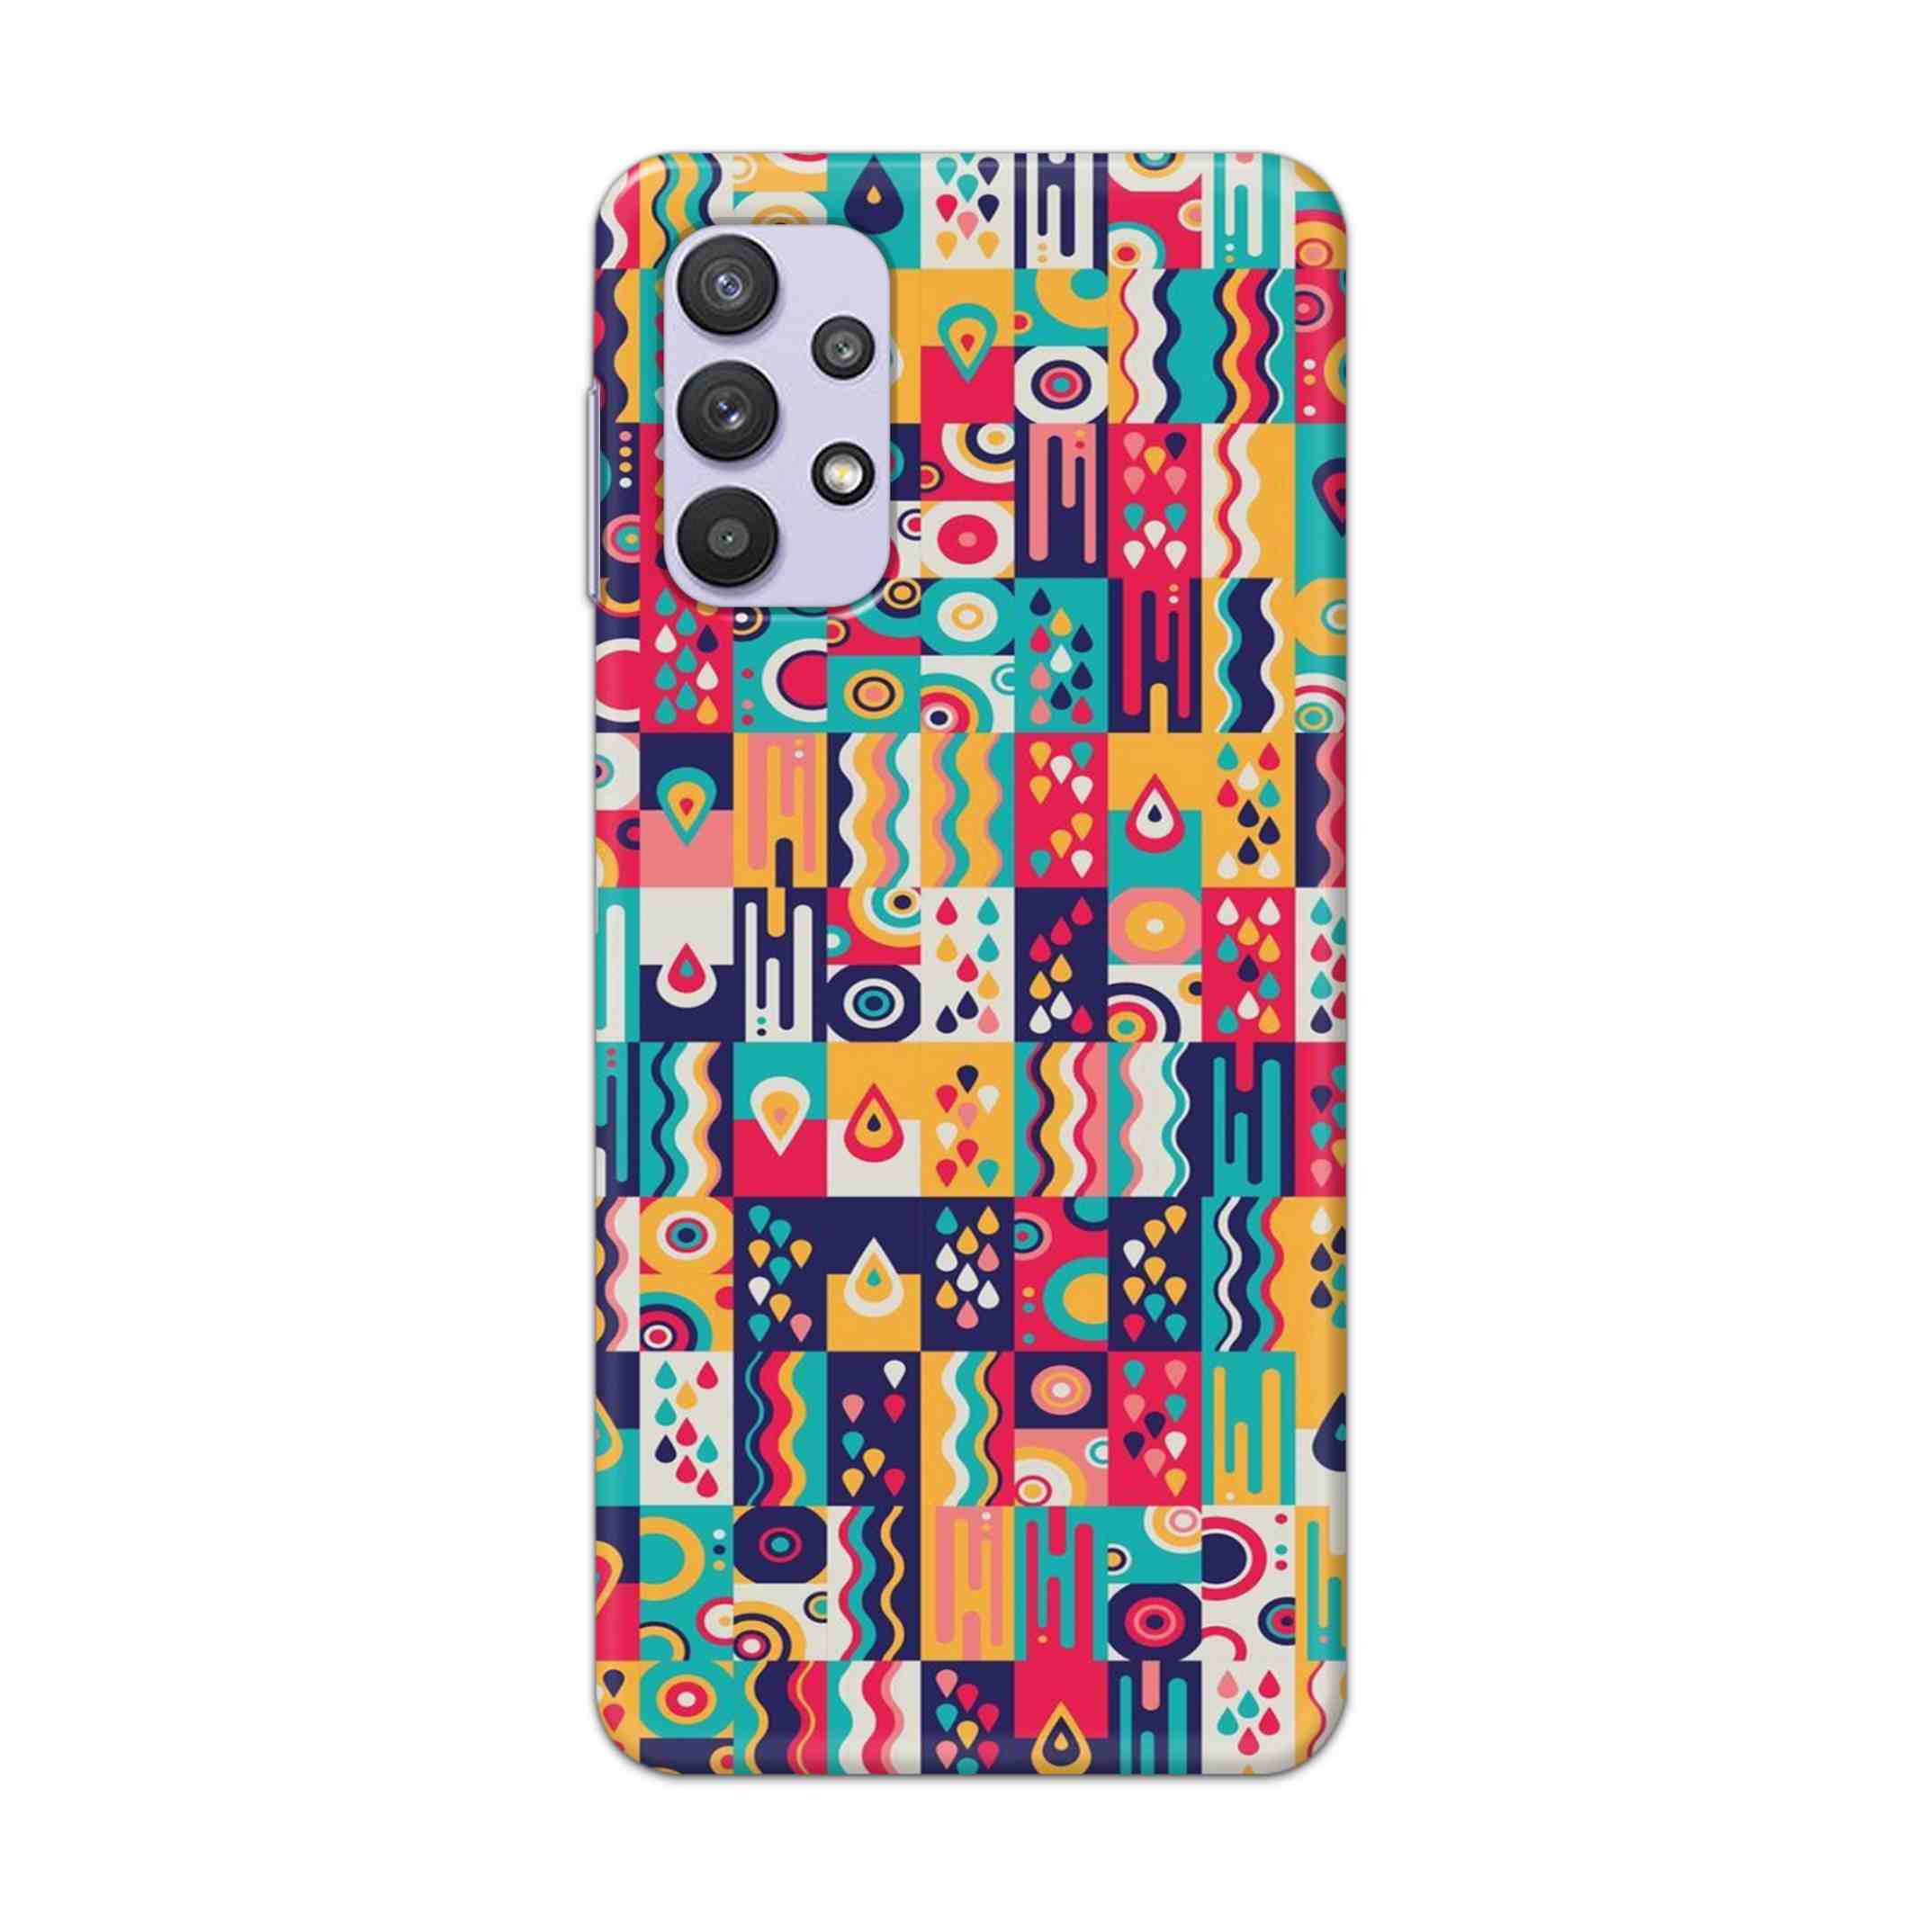 Buy Art Hard Back Mobile Phone Case Cover For Samsung A32 5G Online